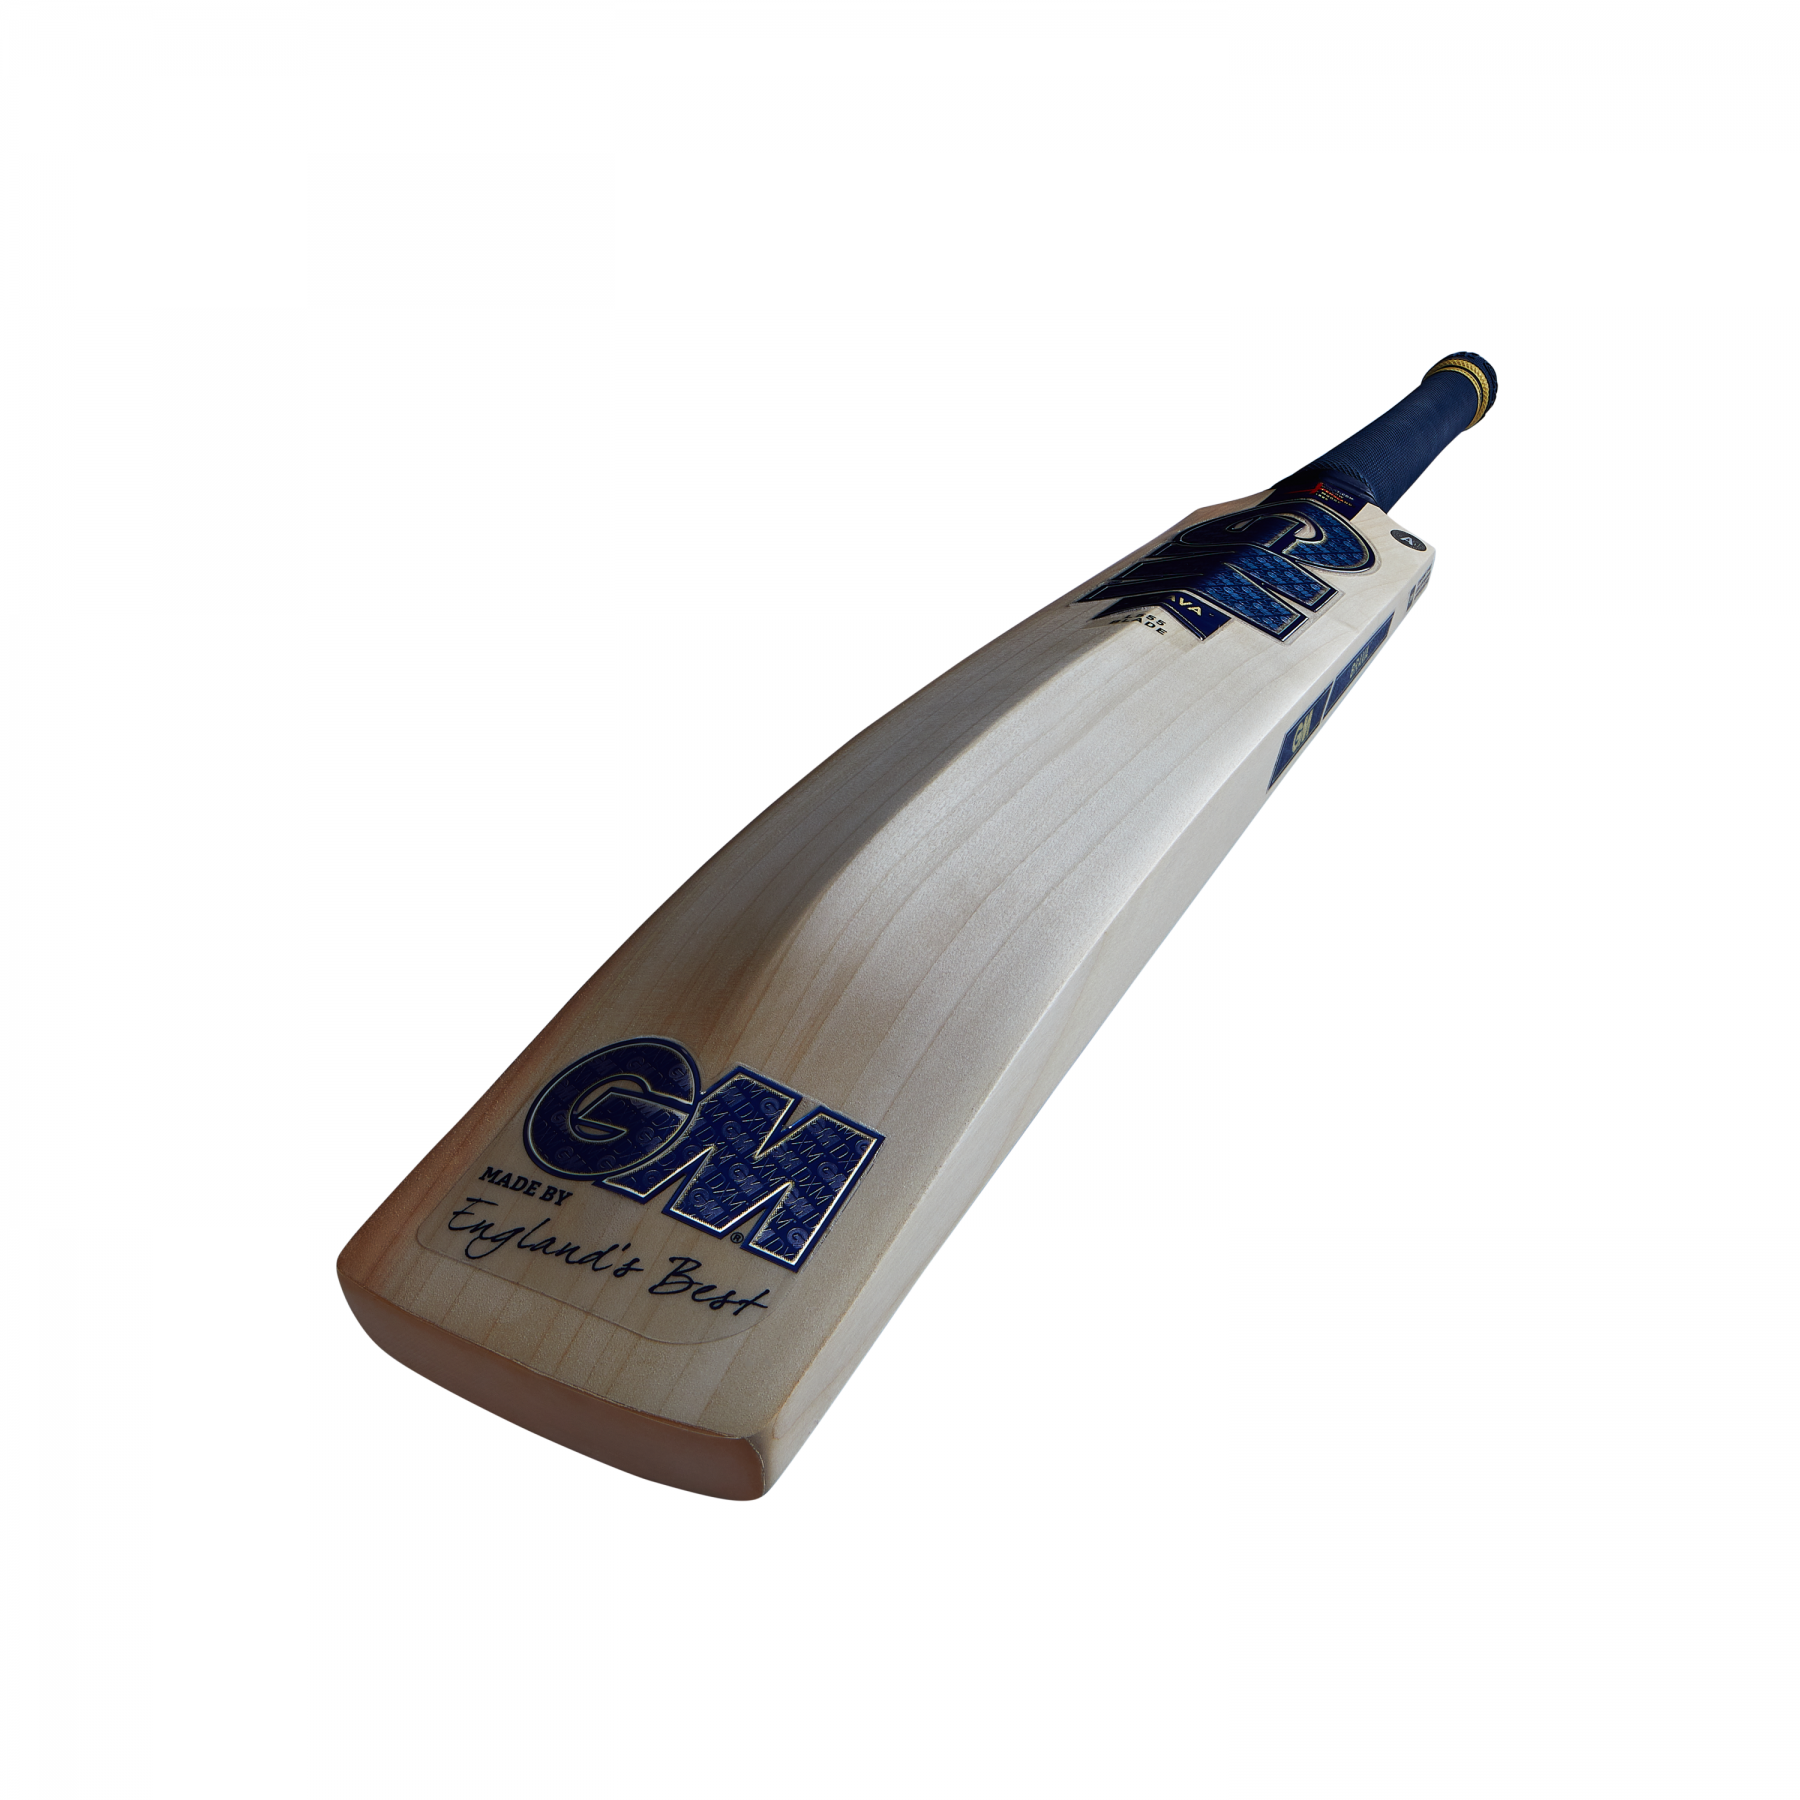 GM Brava DXM 606 Senior English Willow Cricket Bat